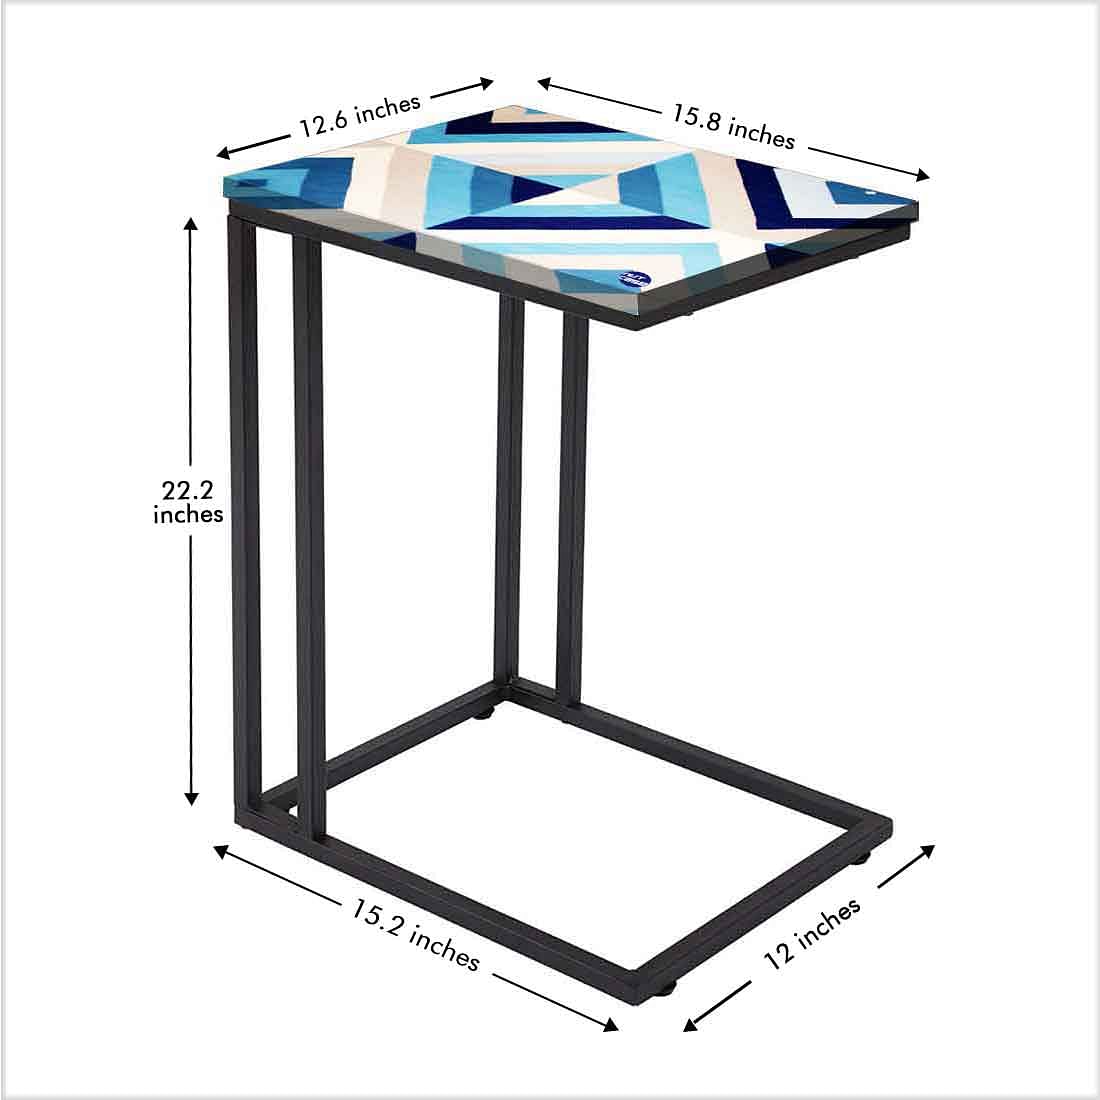 C Shaped End Table For Sofa - Blue Diamond Nutcase